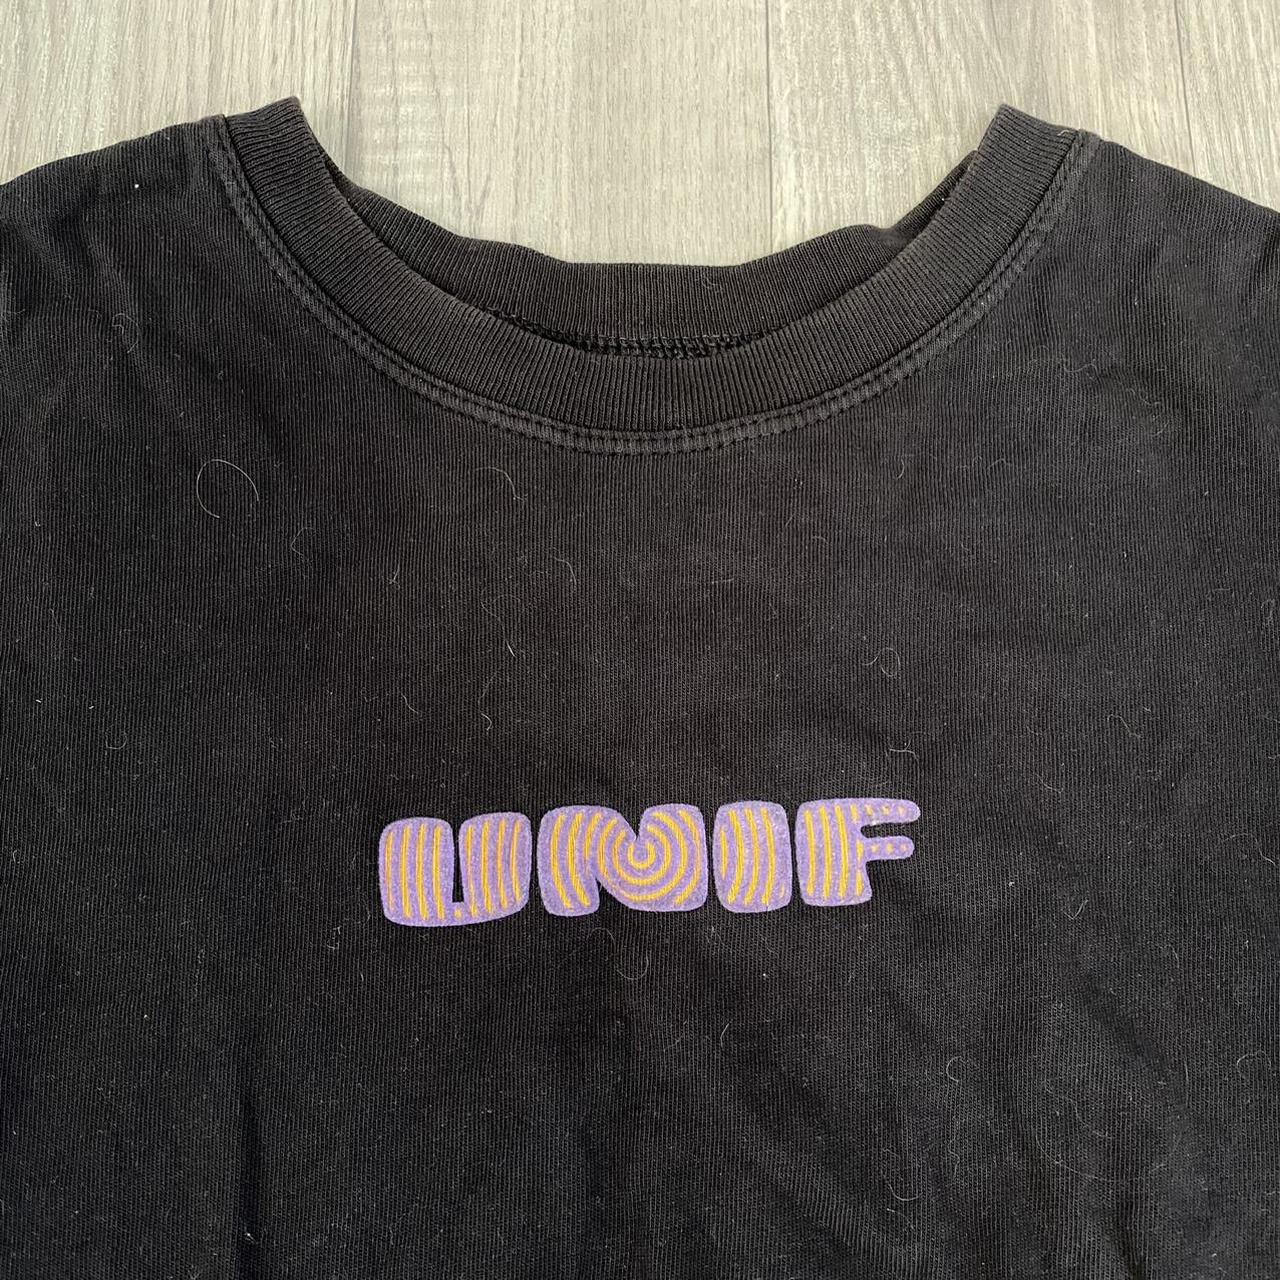 UNIF logo fuzzy black crop top t shirt. So cute!... - Depop